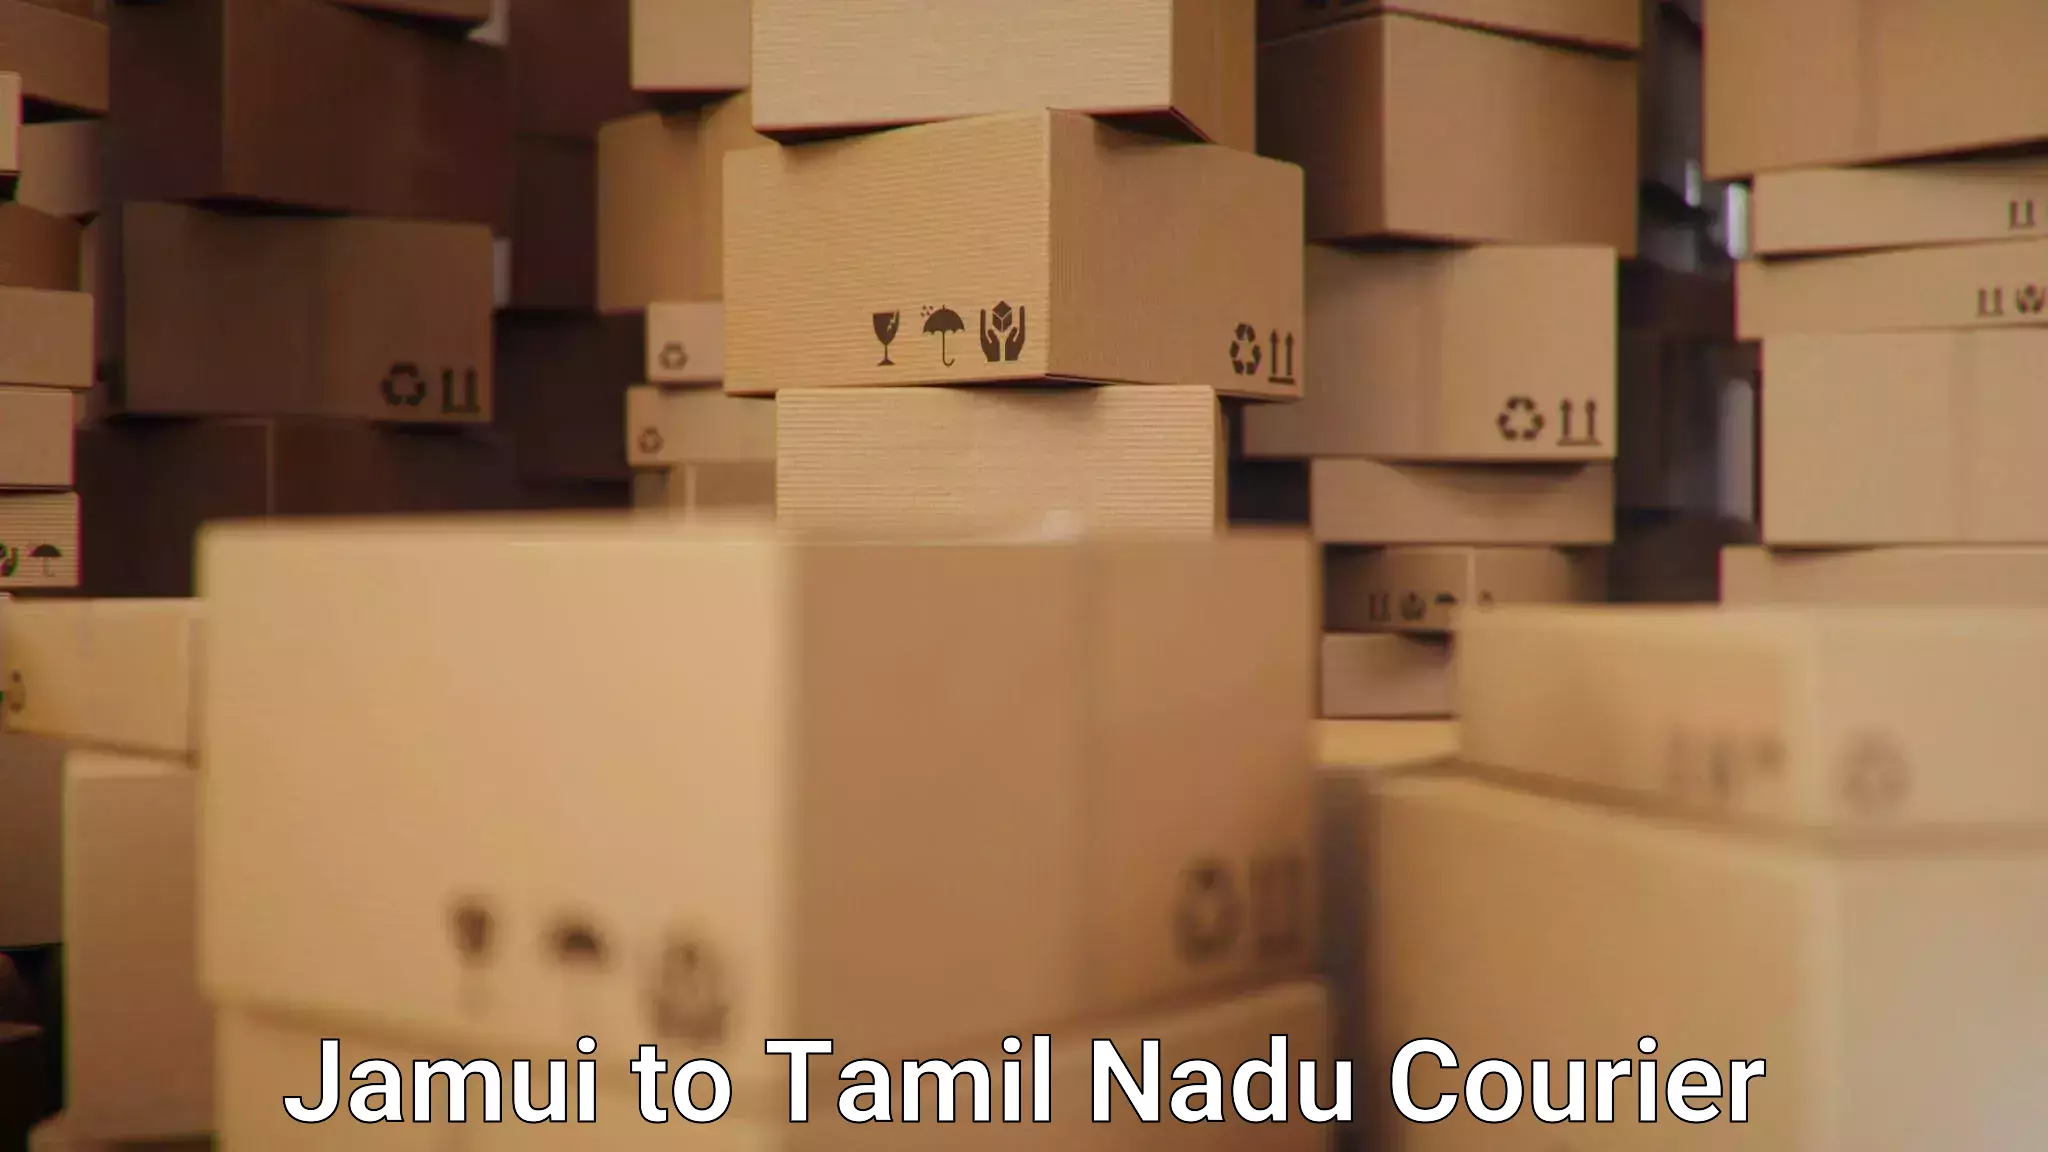 Easy return solutions Jamui to Tamil Nadu